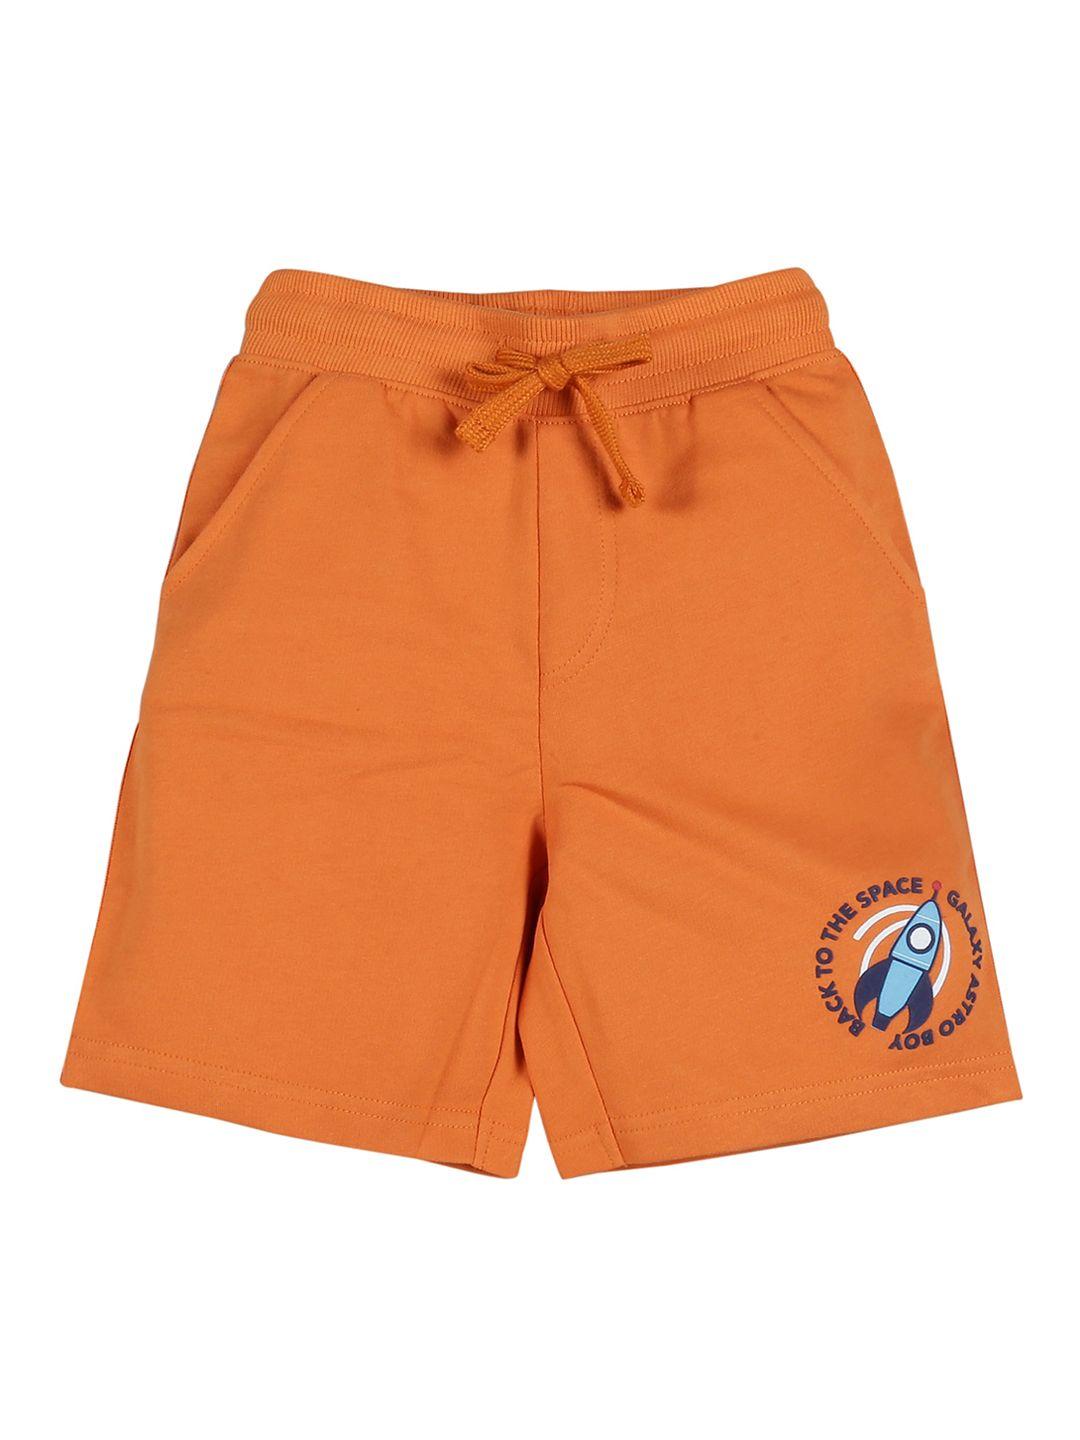 plum tree boys orange regular shorts